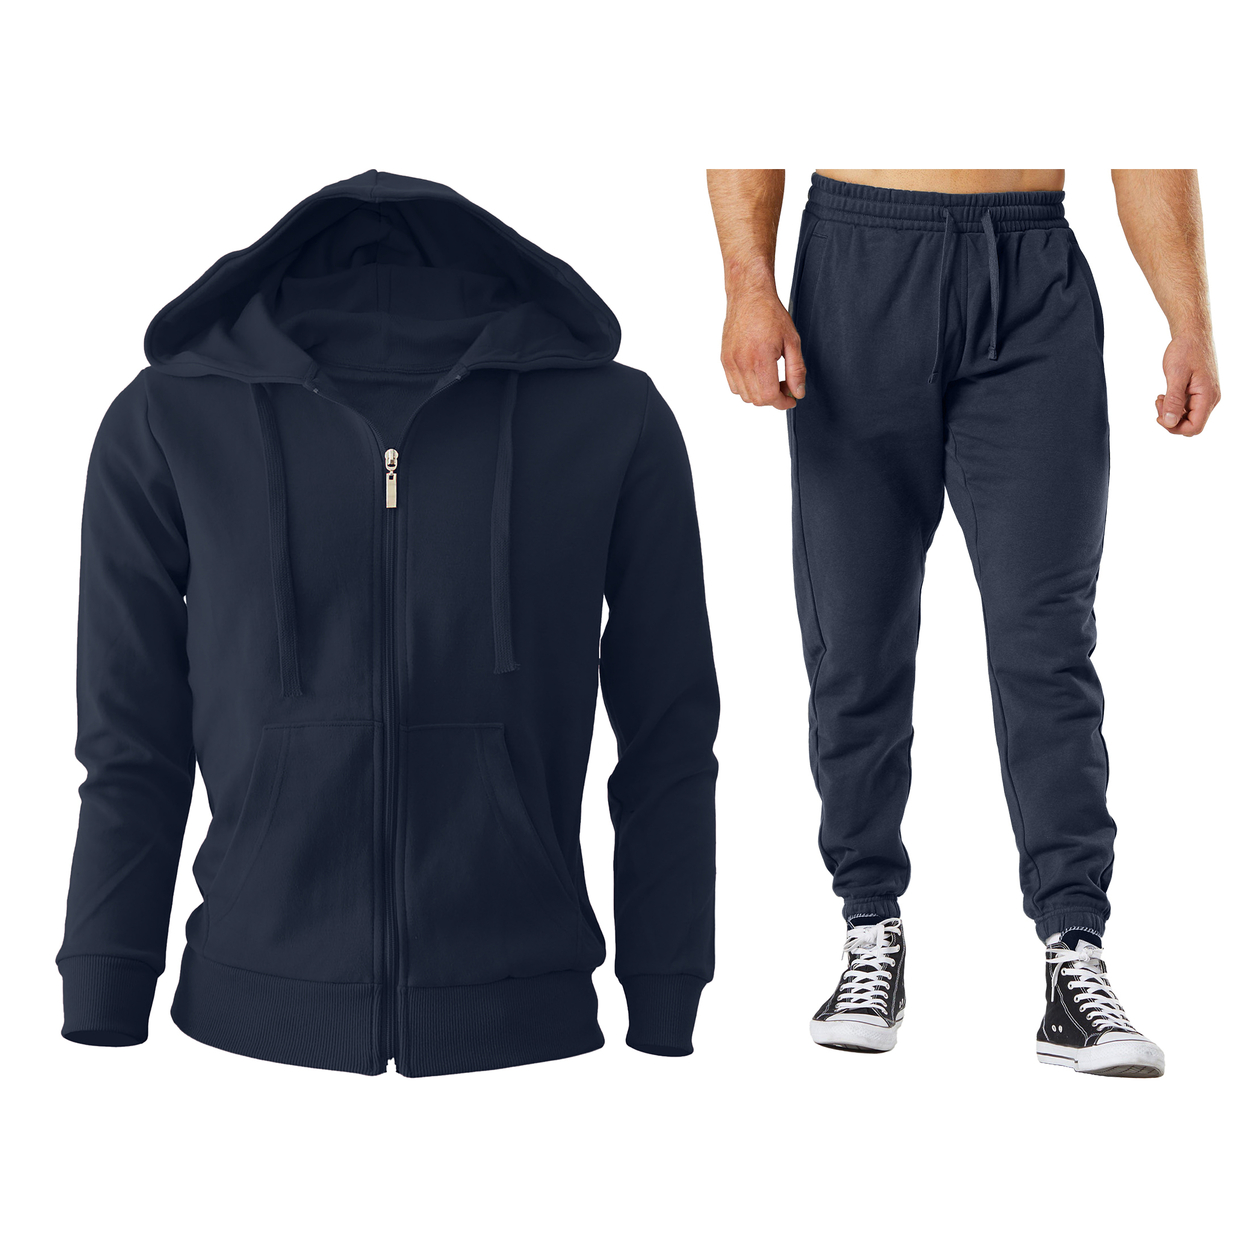 2-Piece: Men's Winter Warm Cozy Athletic Multi-Pockets BIG & TALL Sweatsuit Set - Grey, Large